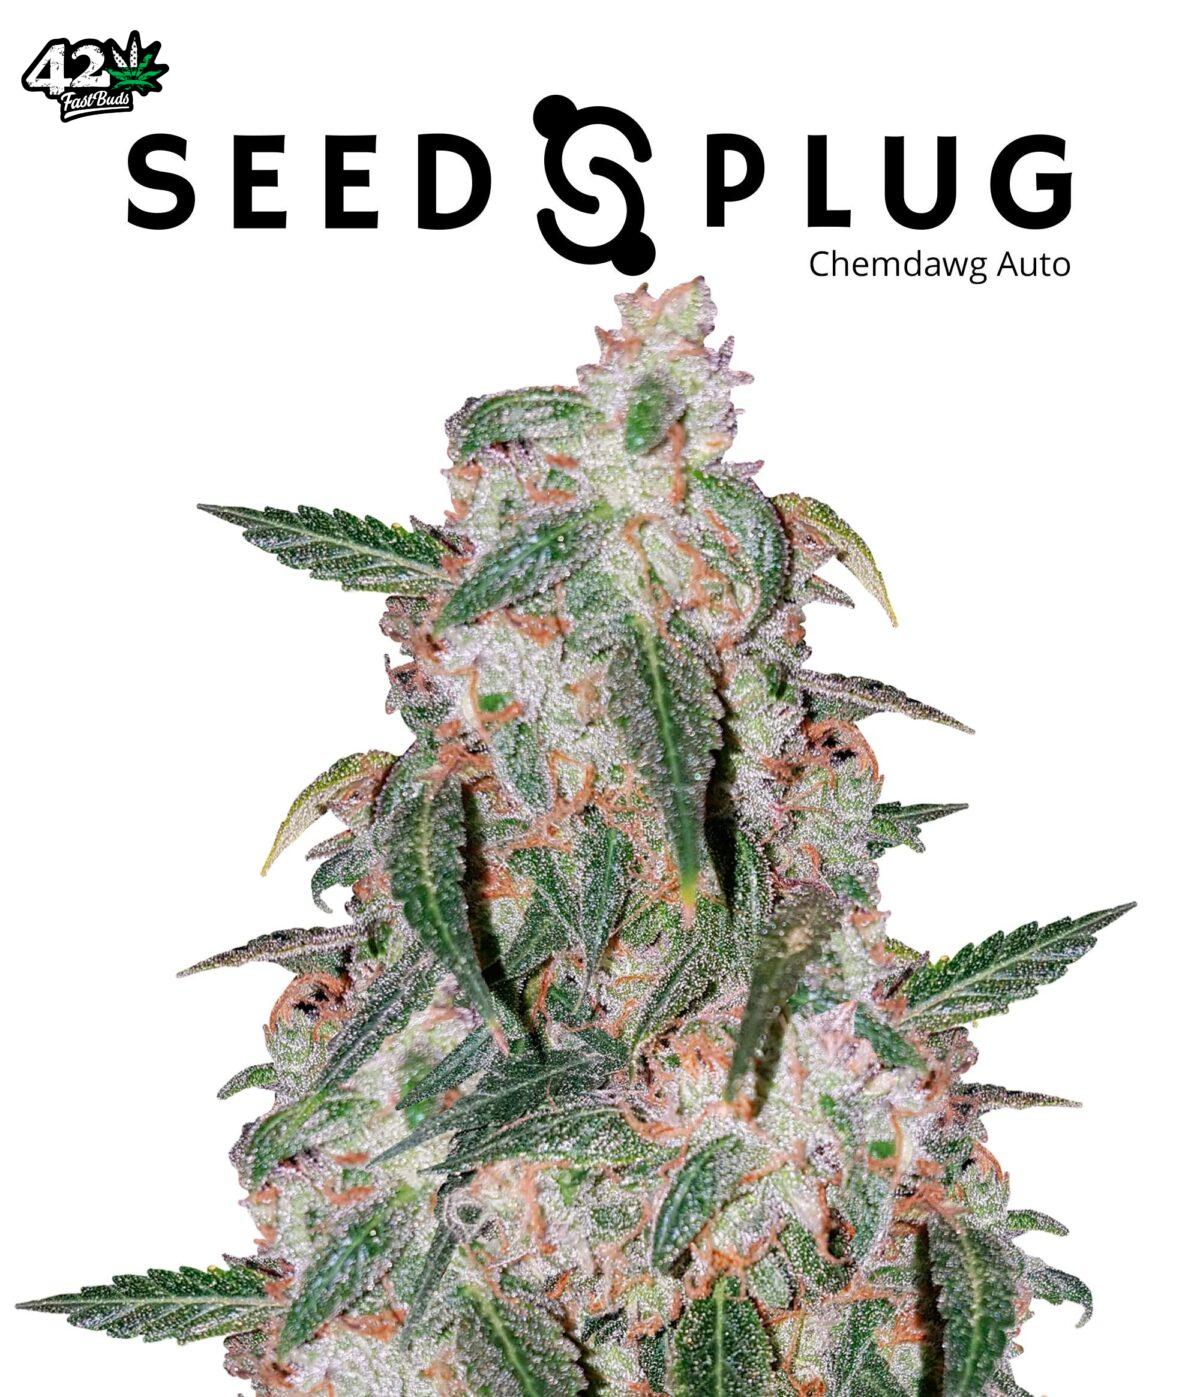 Chemdawg Auto | SeedsPlug